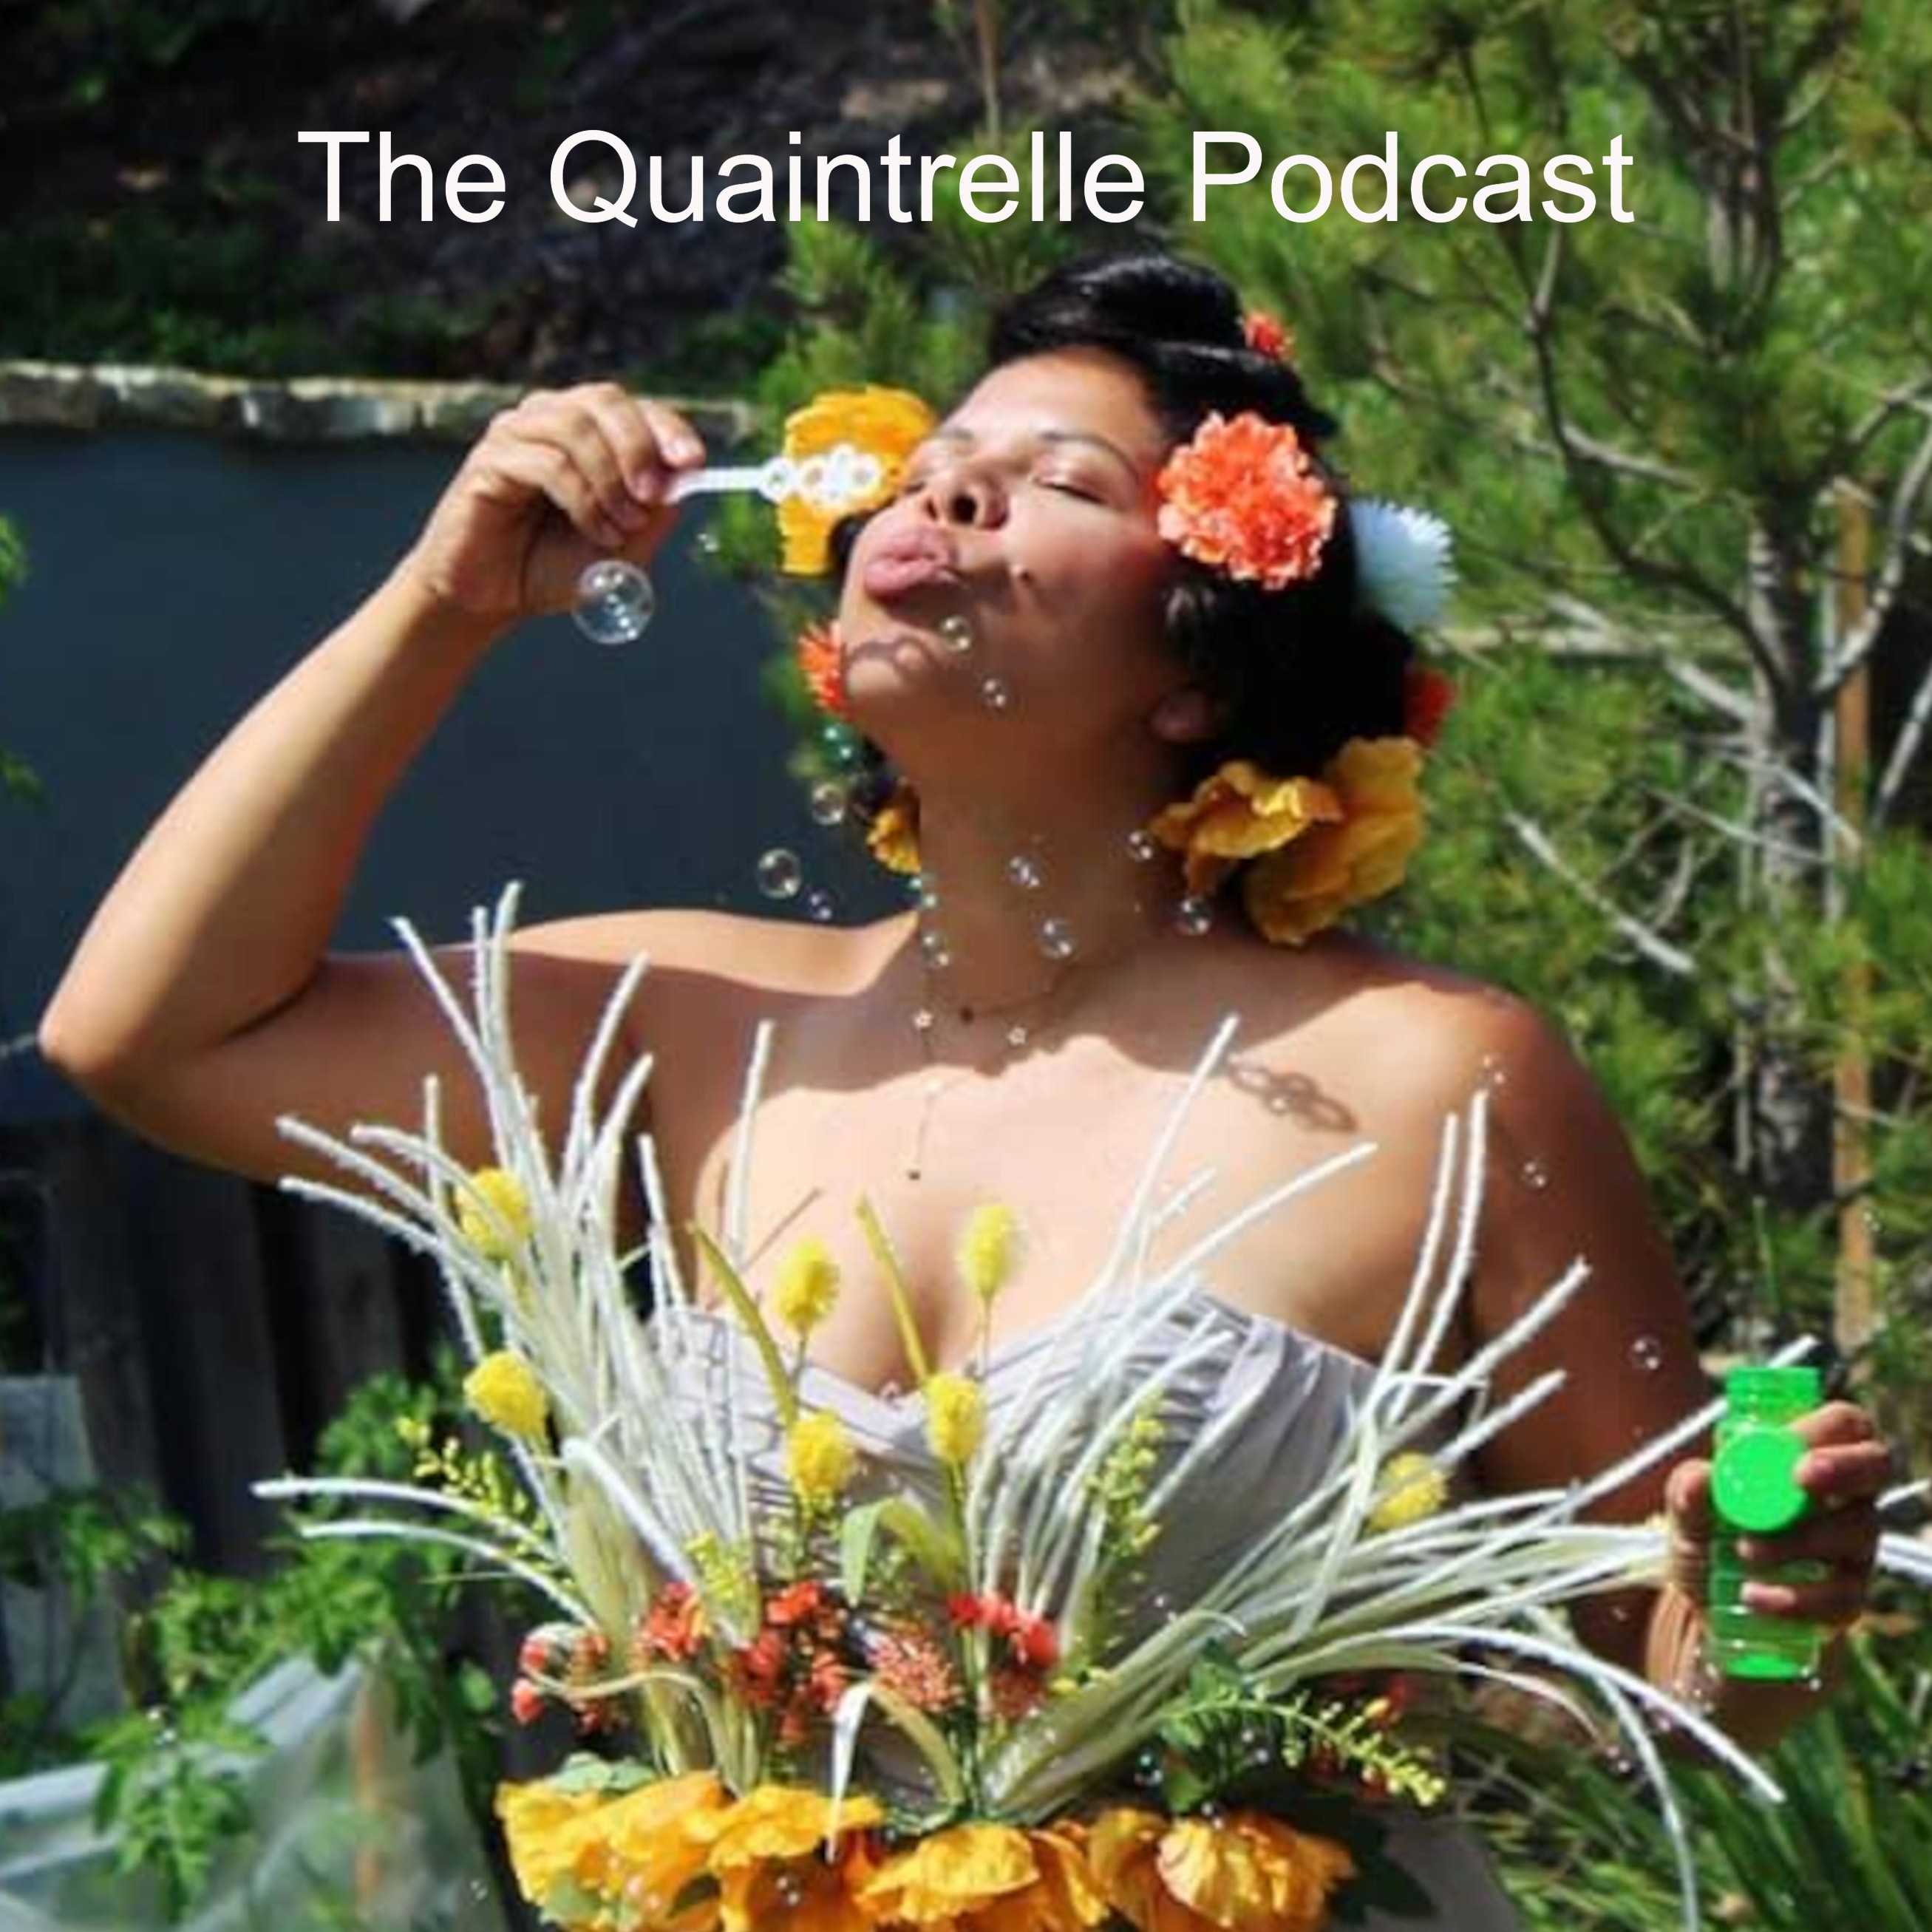 The Quaintrelle Podcast